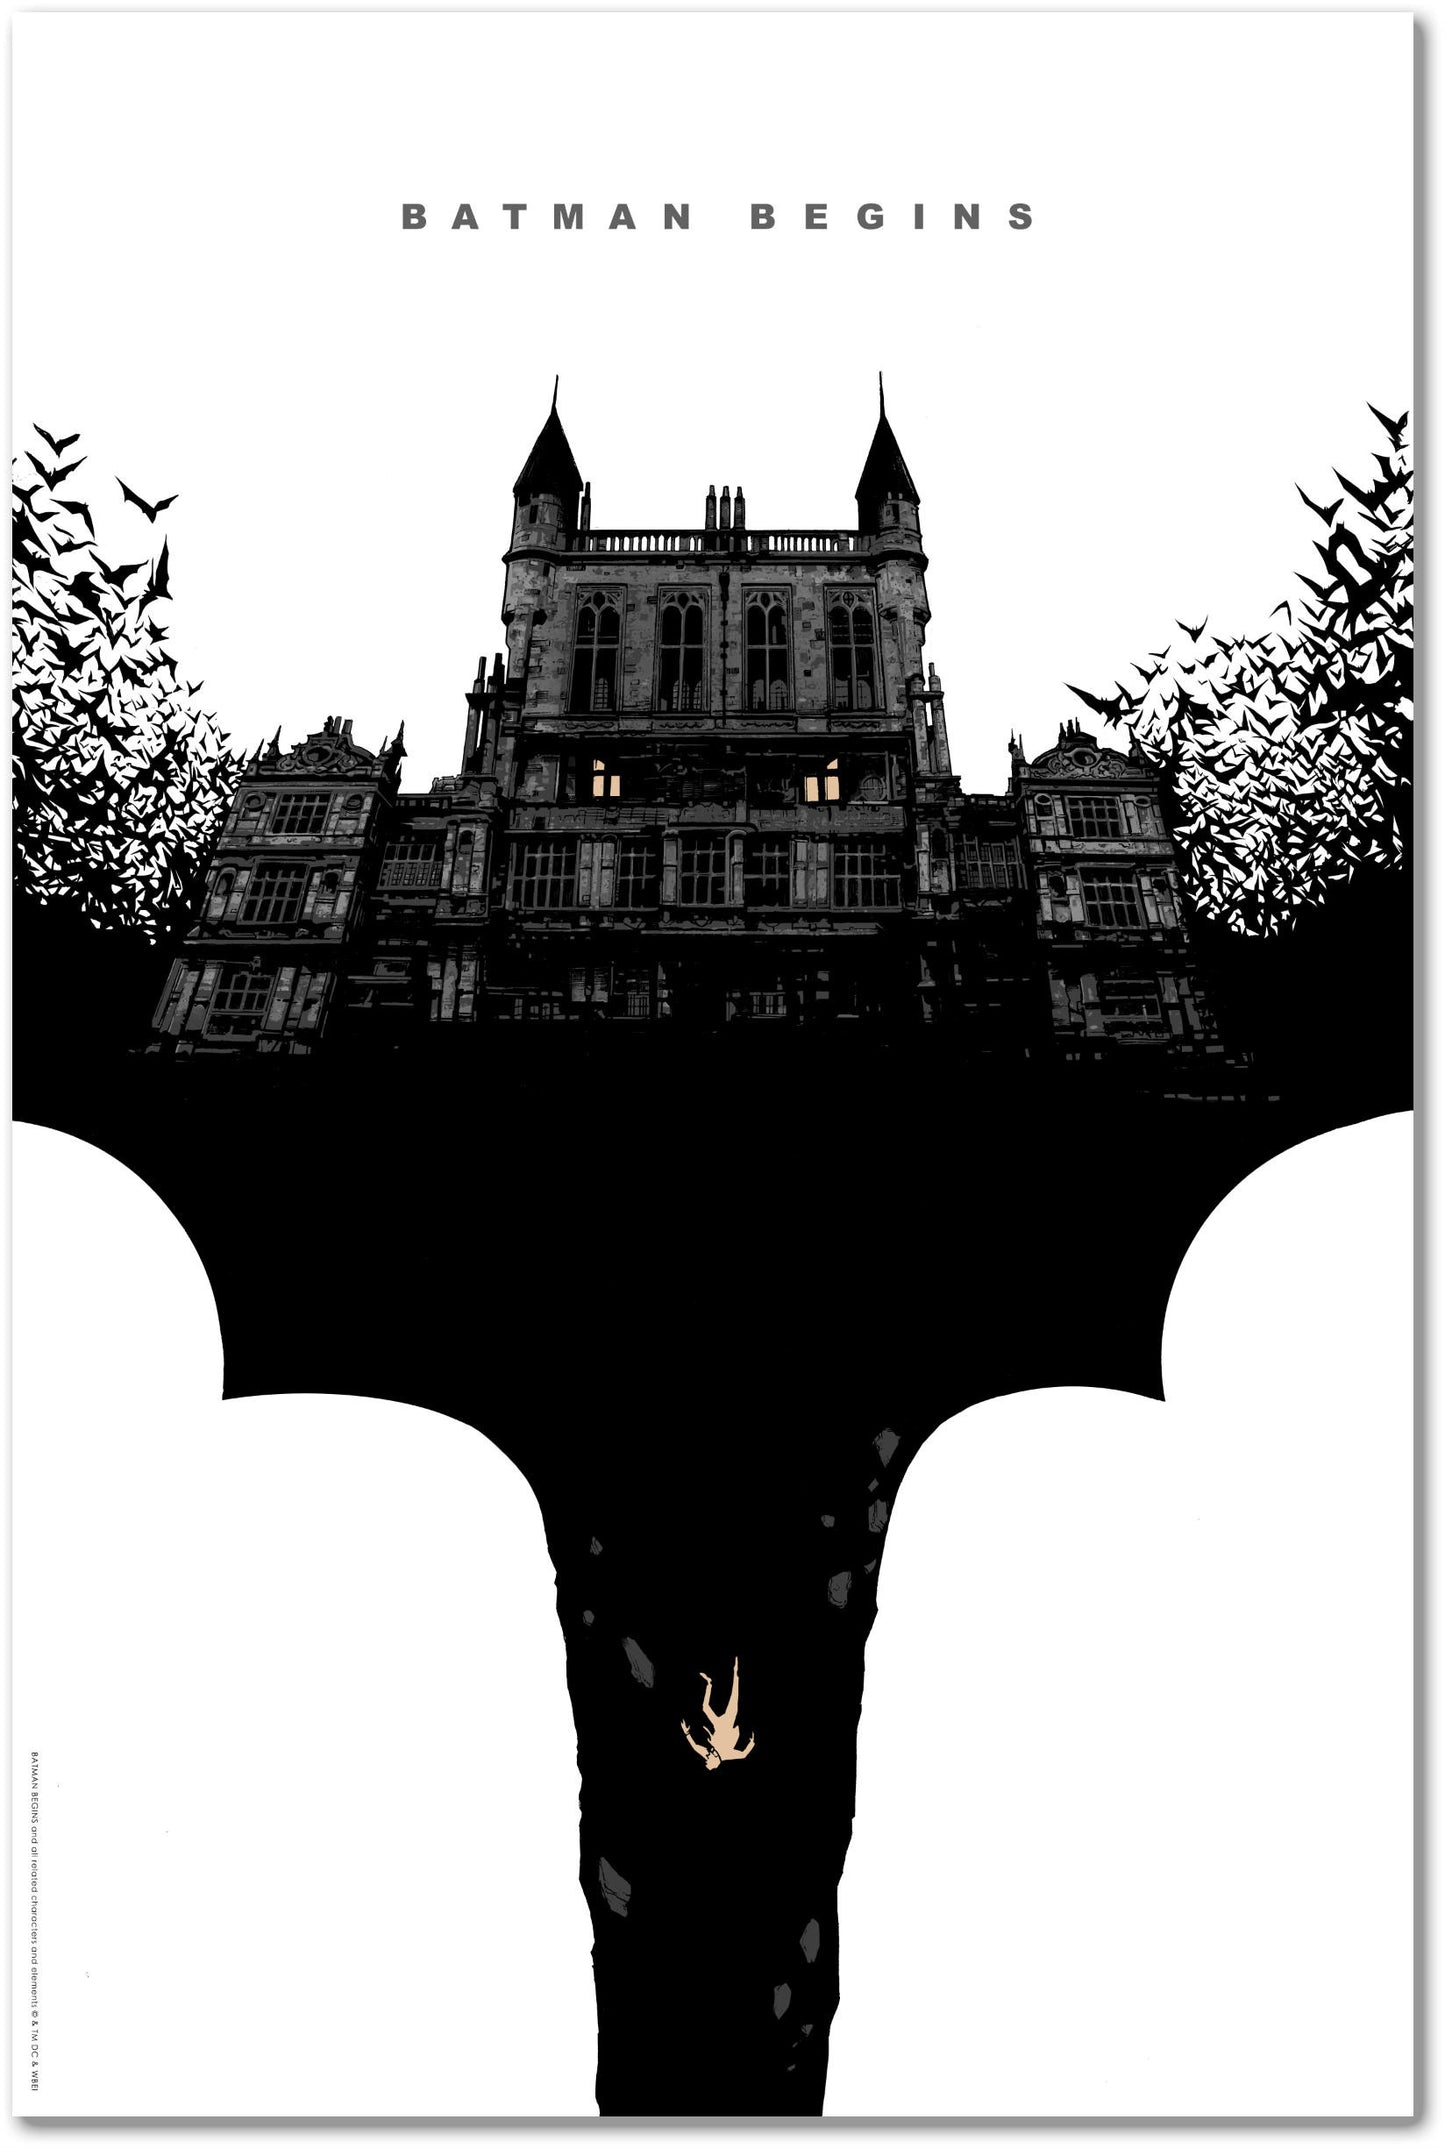 Lee Garbett "Batman Begins" Variant